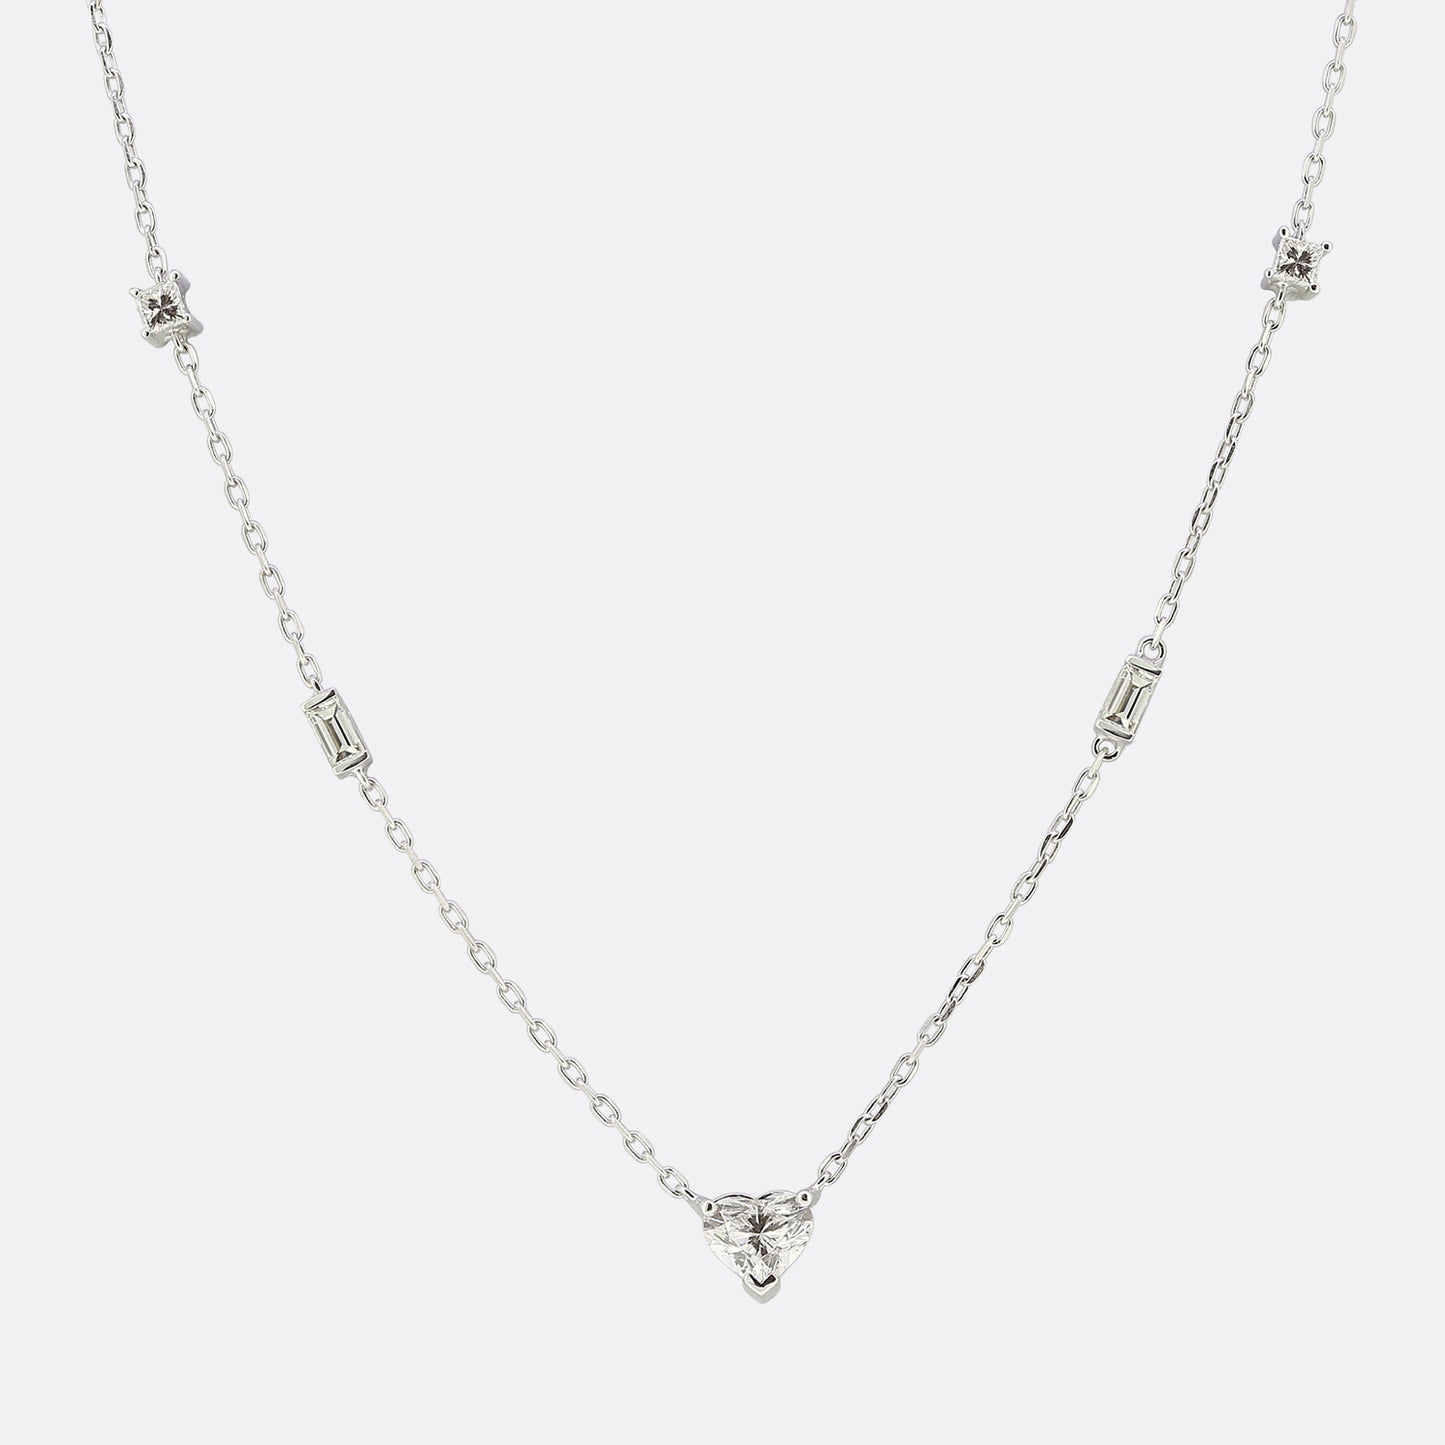 0.93 Carat Heart Shaped Diamond Necklace